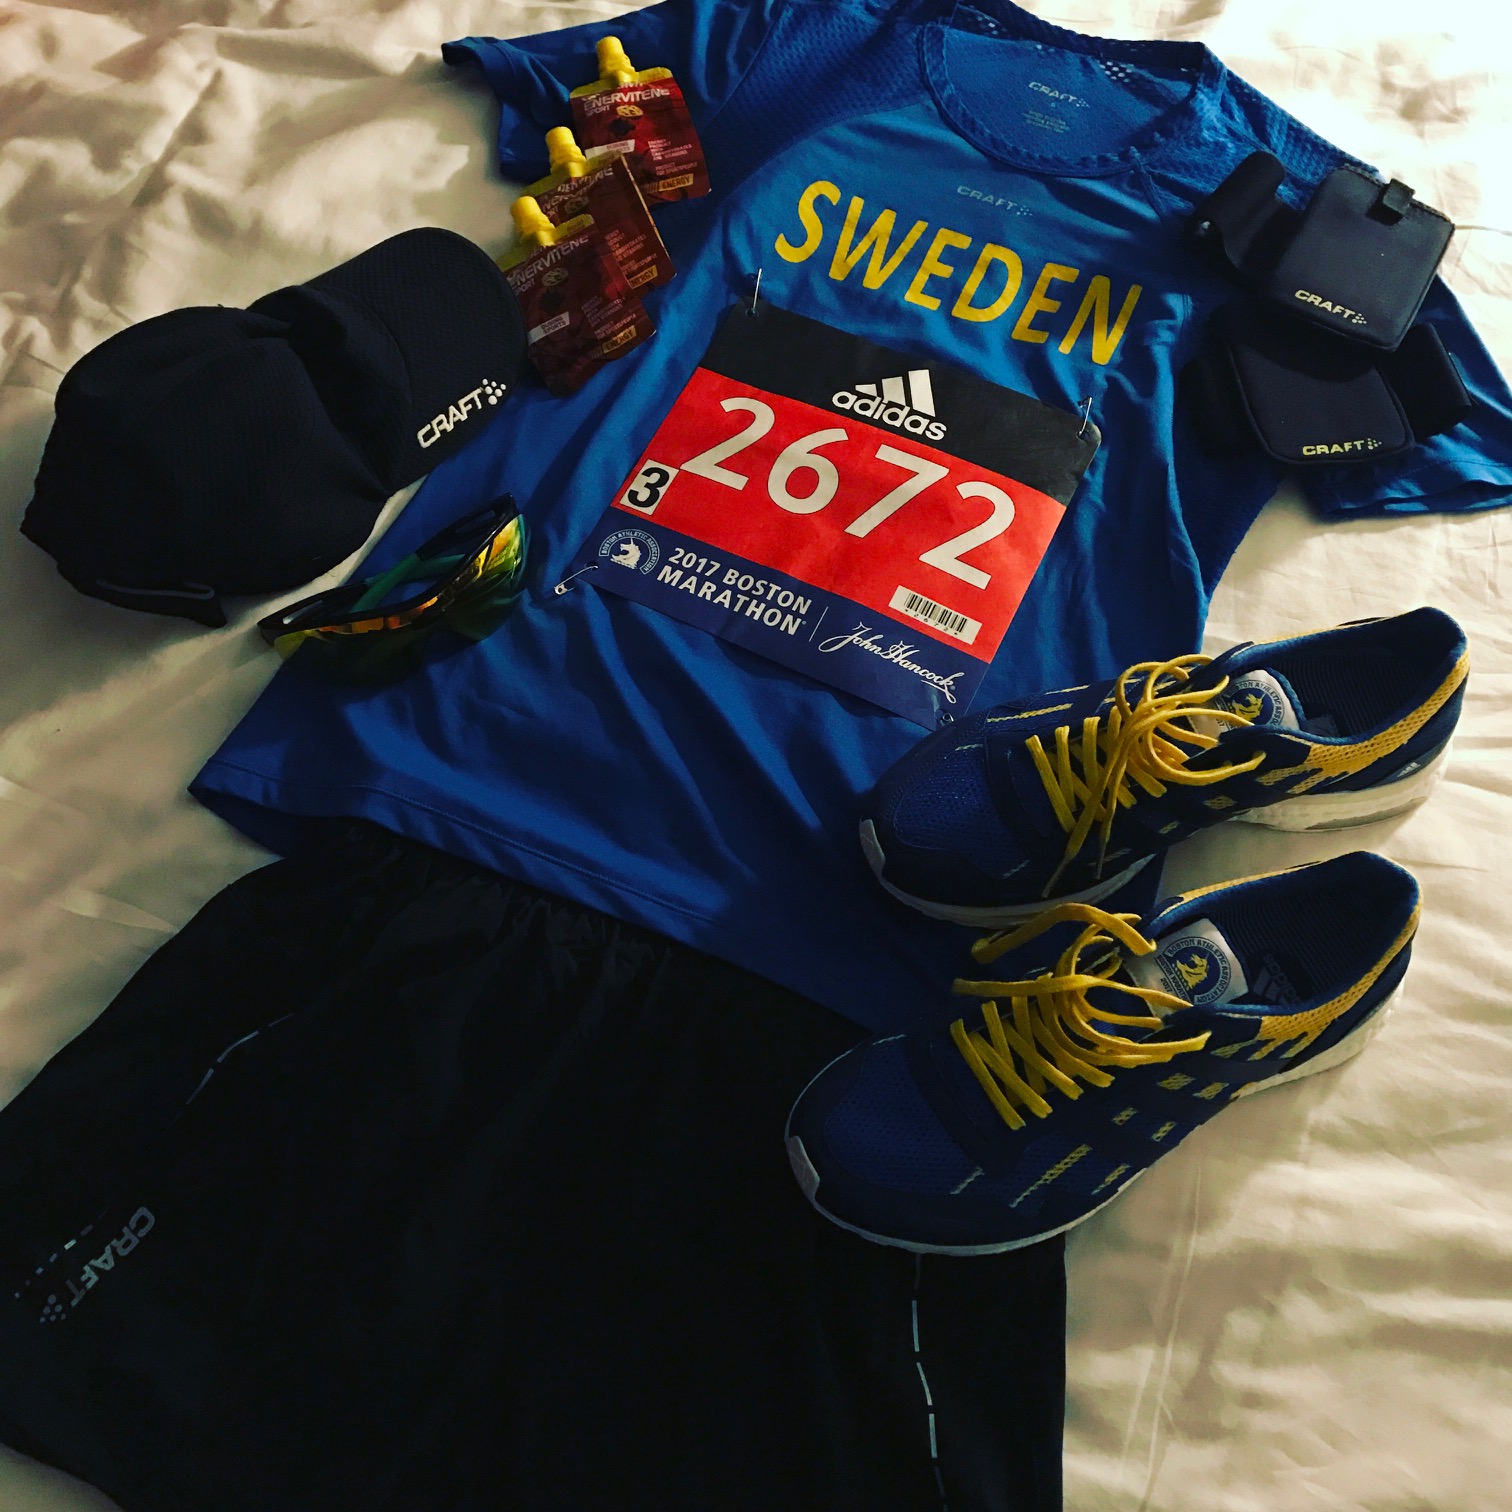 Boston Marathon 2017